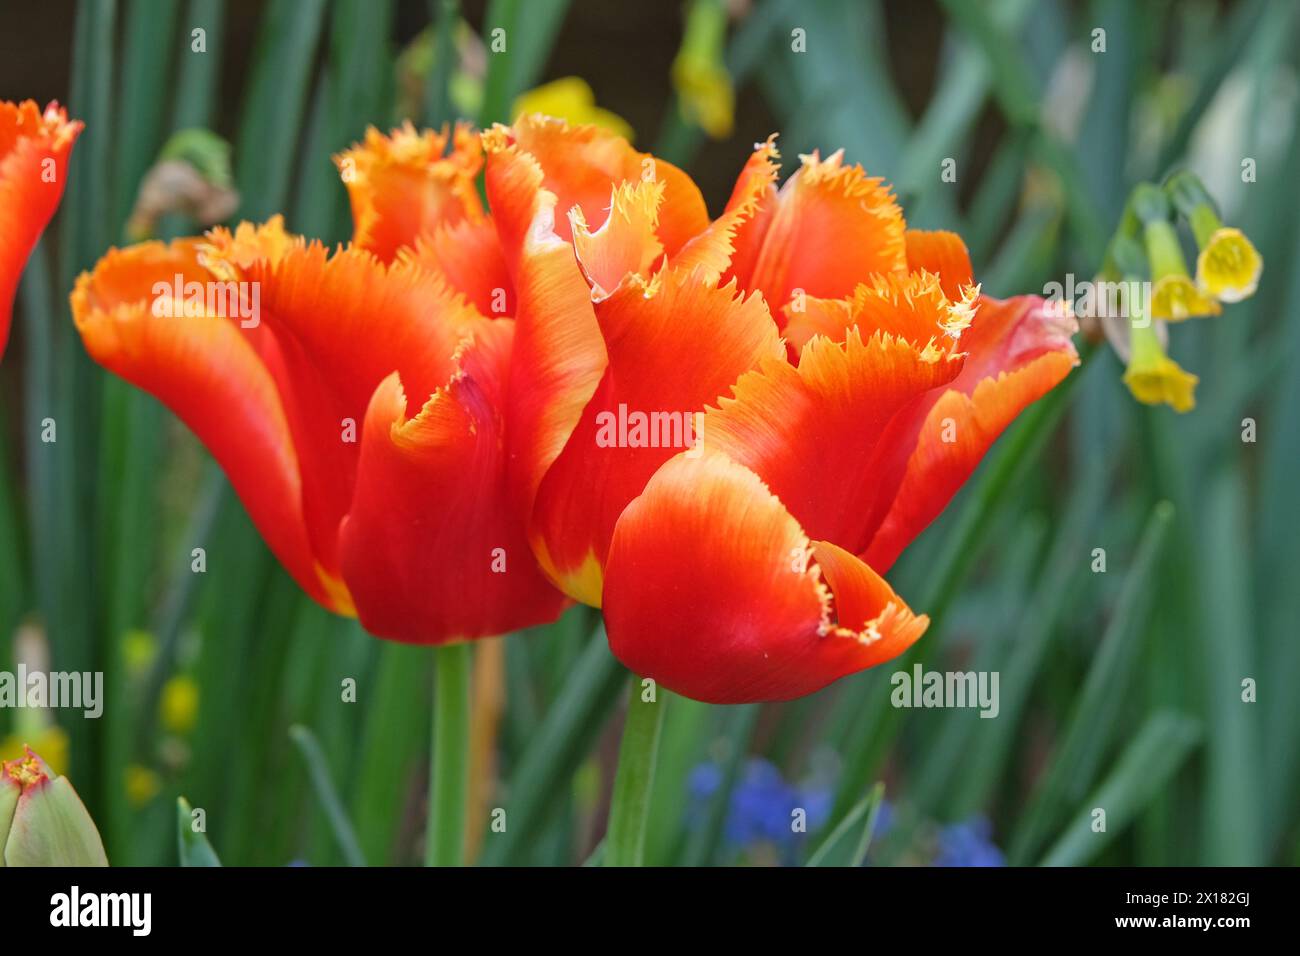 Orangefarbene und rote gefiederte Tulpe, Tulipa „Lambada“ in Blüte. Stockfoto